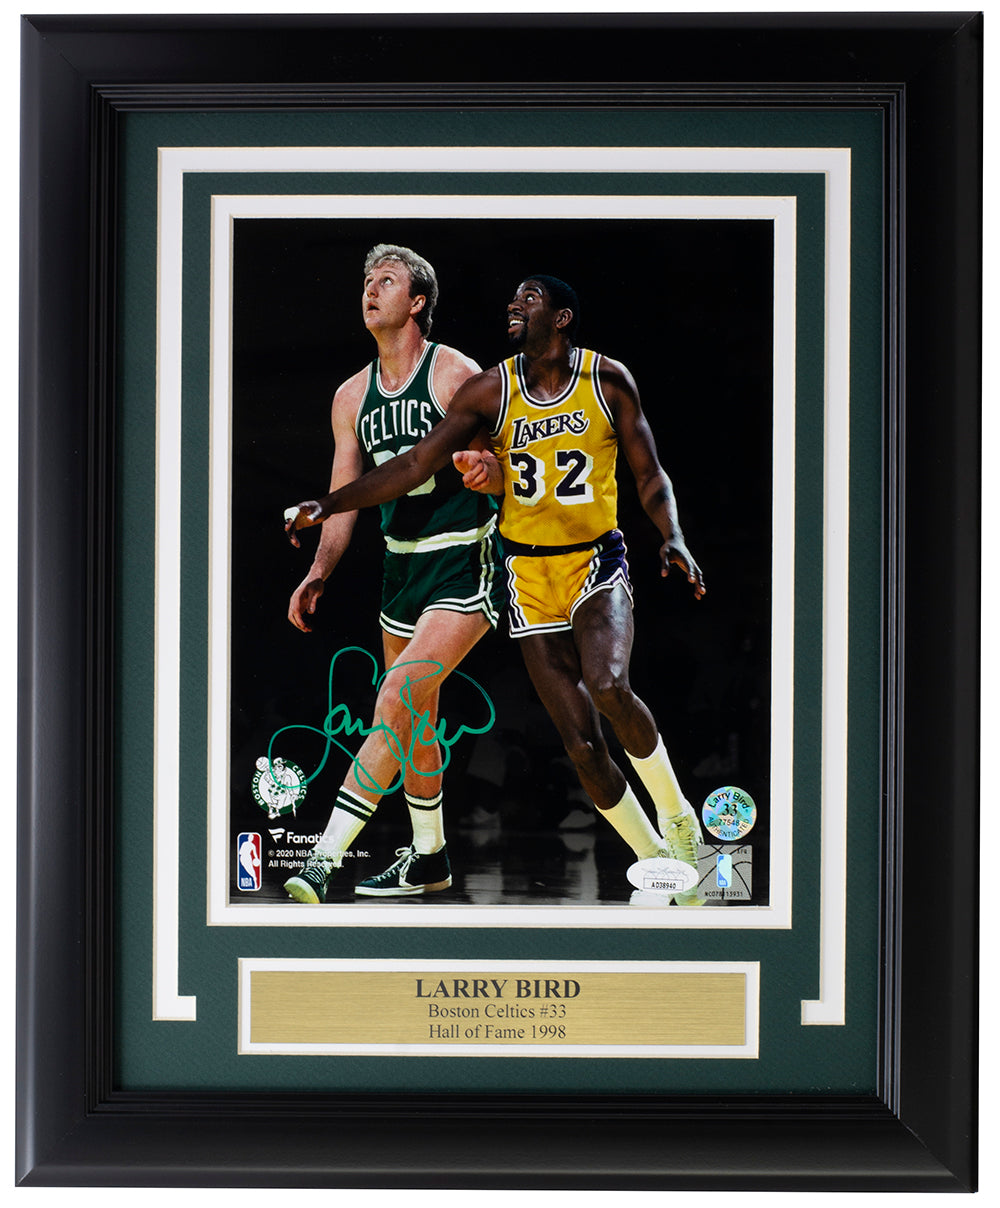 Framed Larry Bird Magic Johnson Dual Facsimile Laser Engraved Signature  Auto 15x16 Basketball Photo